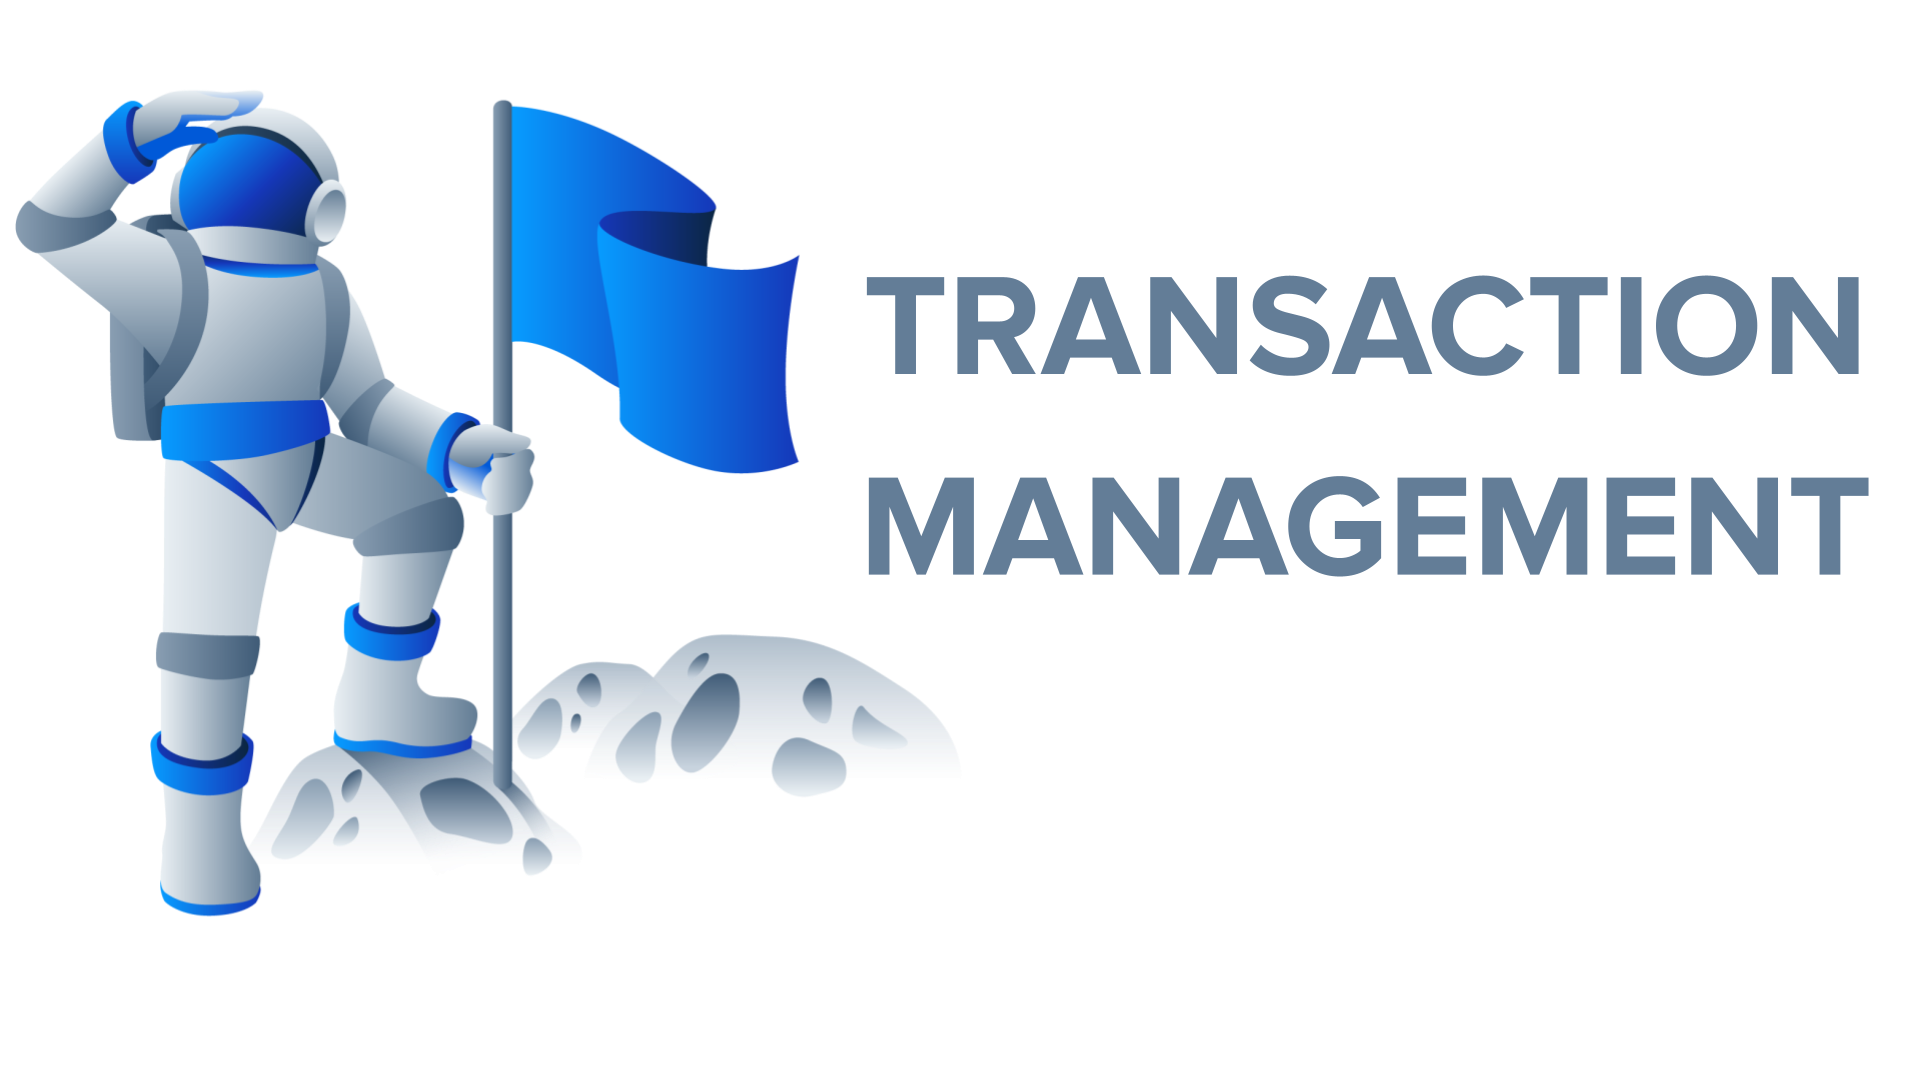 Transaction management logo